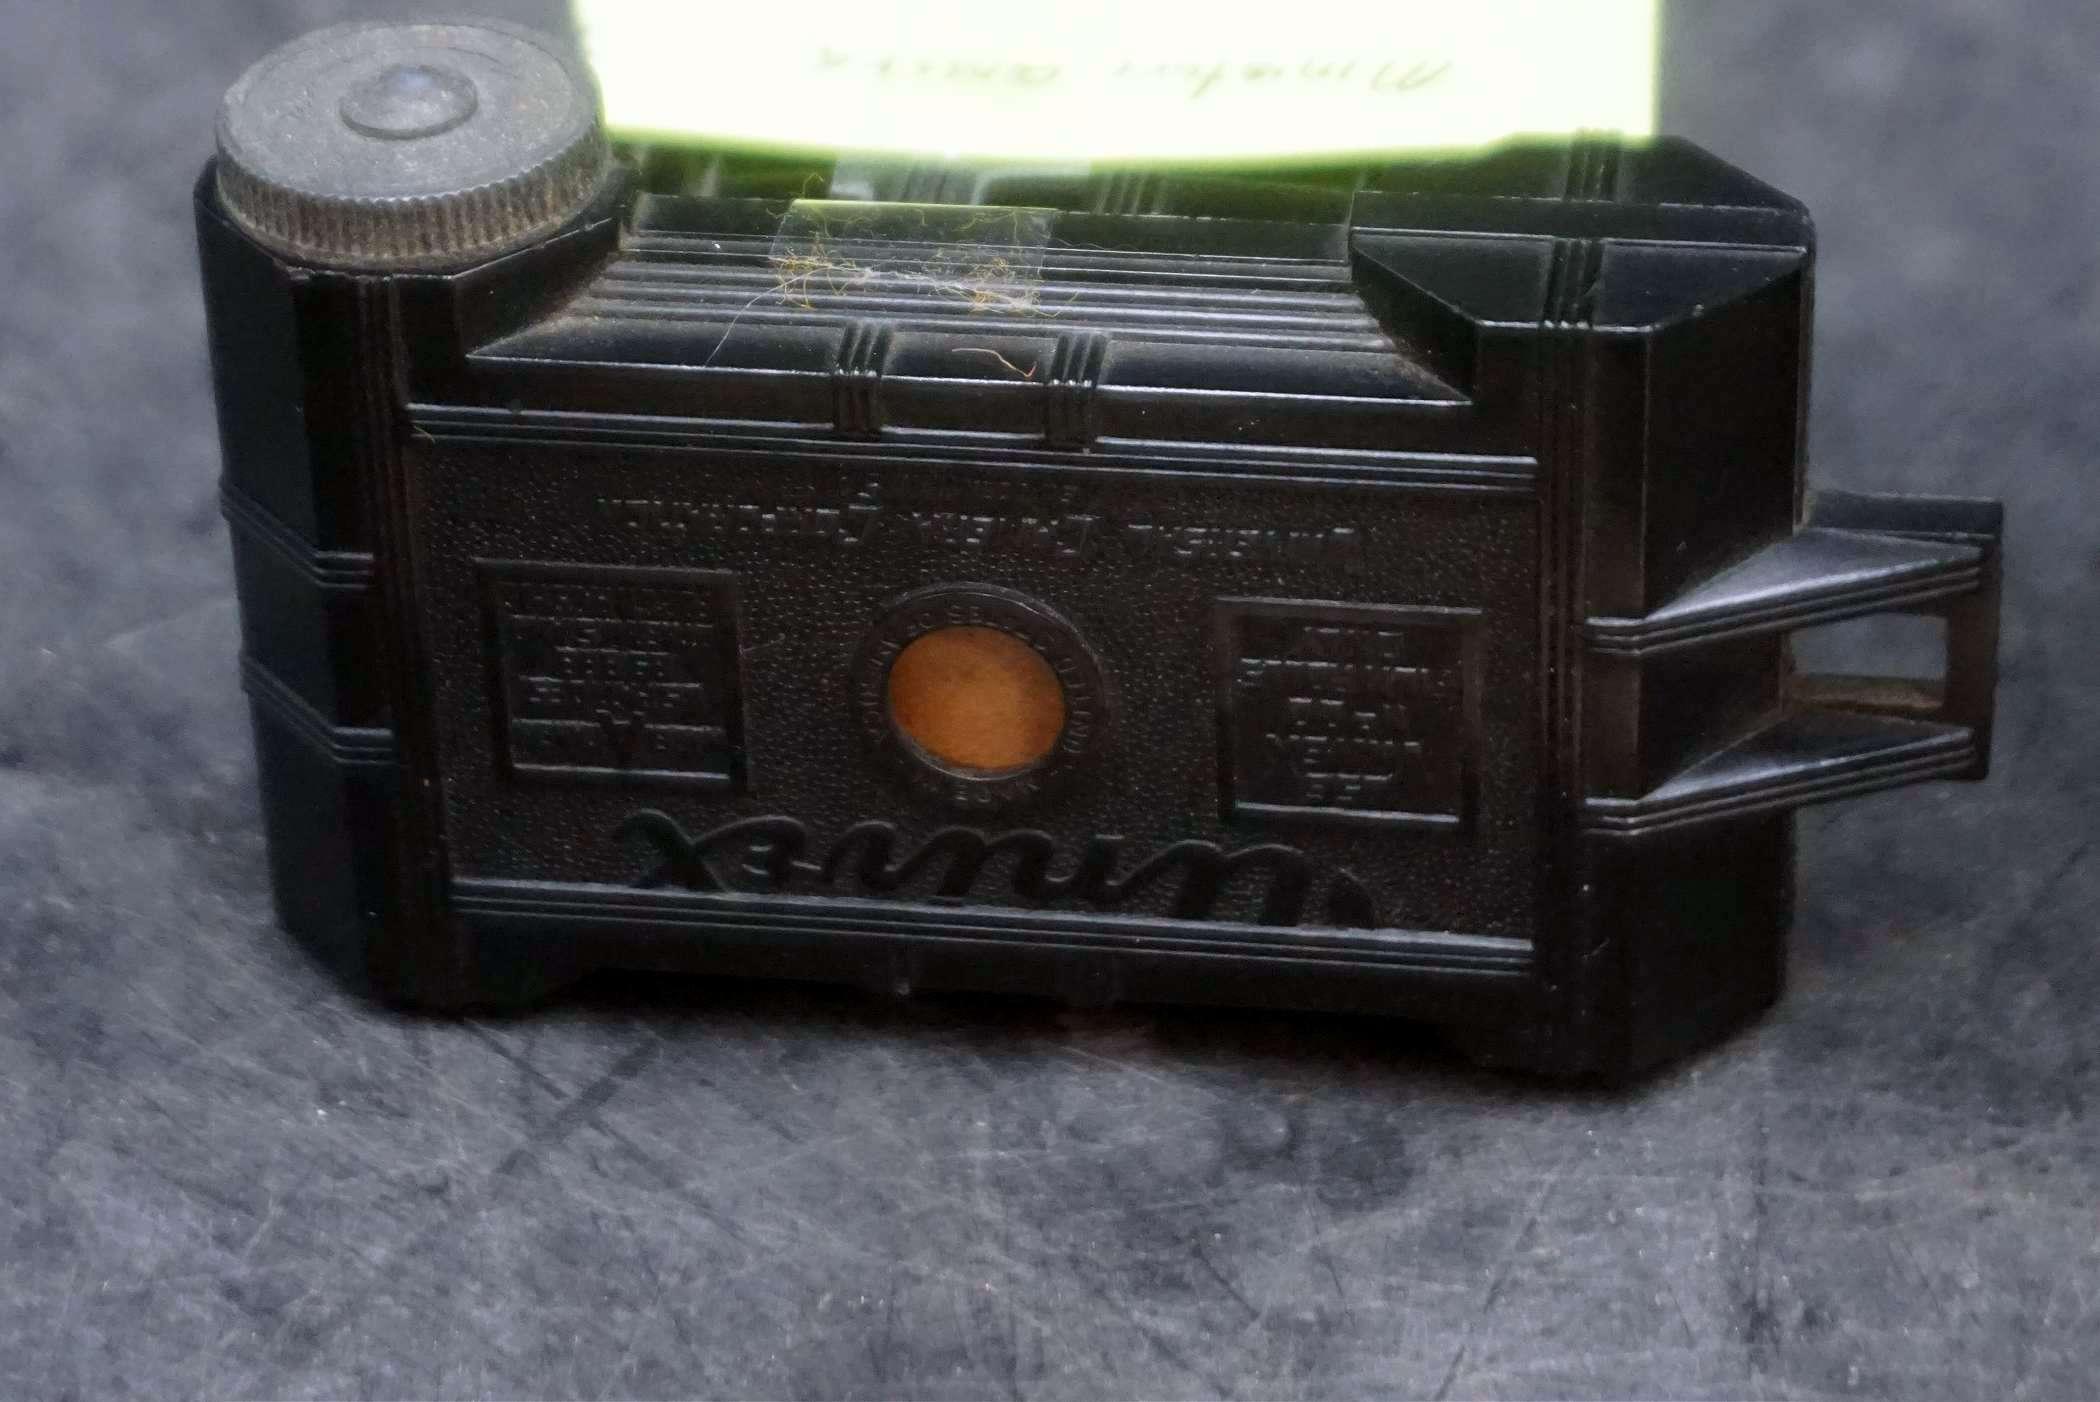 Miniature Camera & Kodak Duaflex Camera